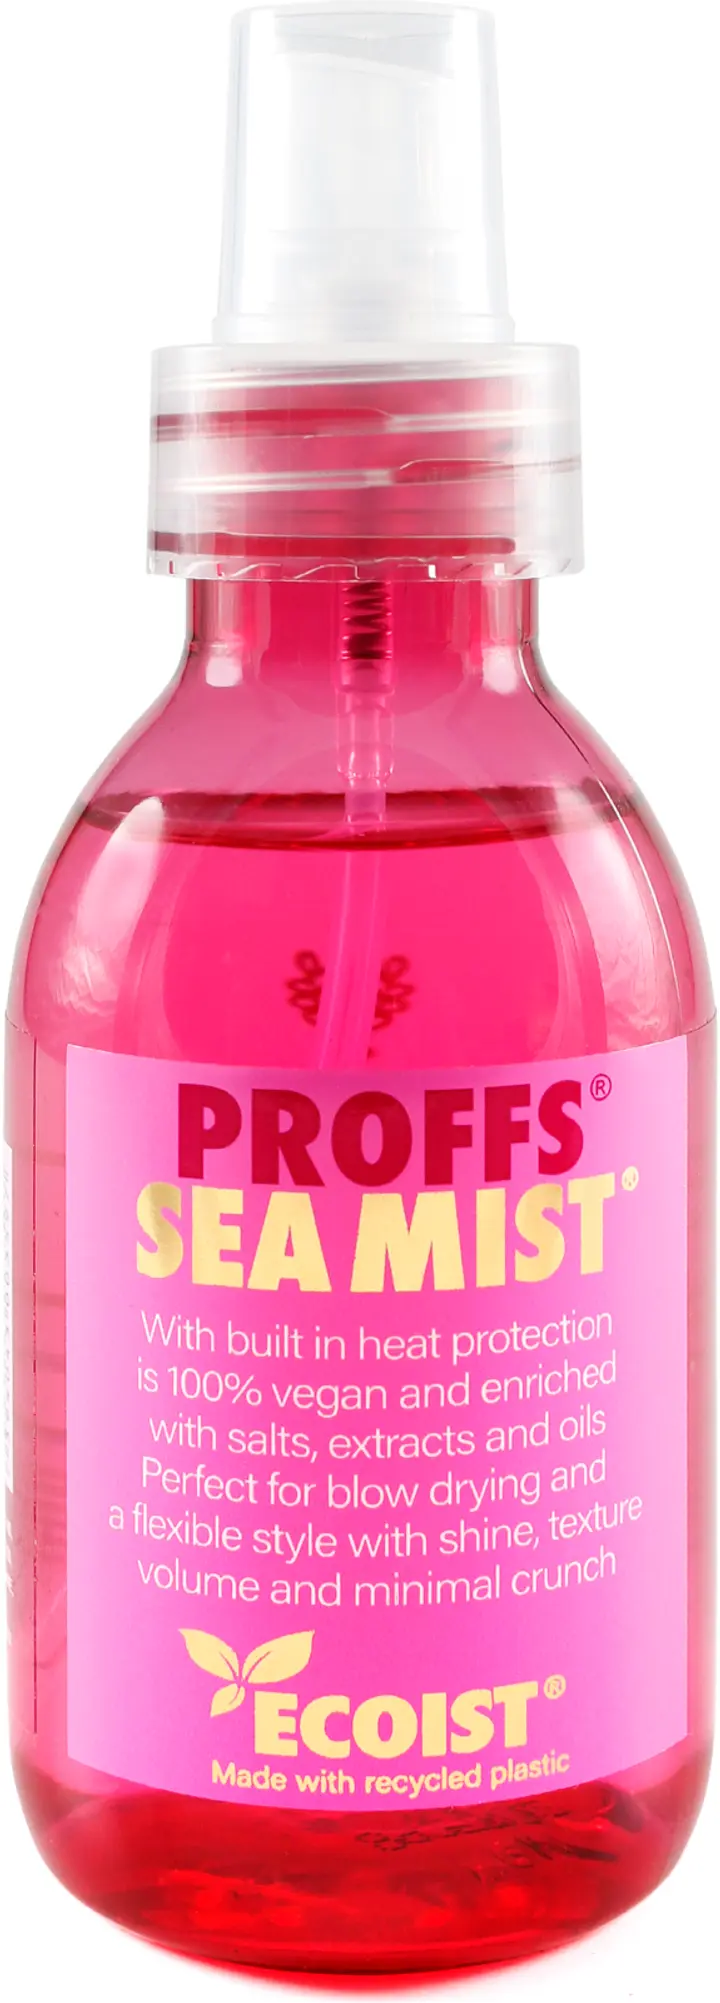 PROFFS Ecoist Sea Mist suolasuihke 150 ml